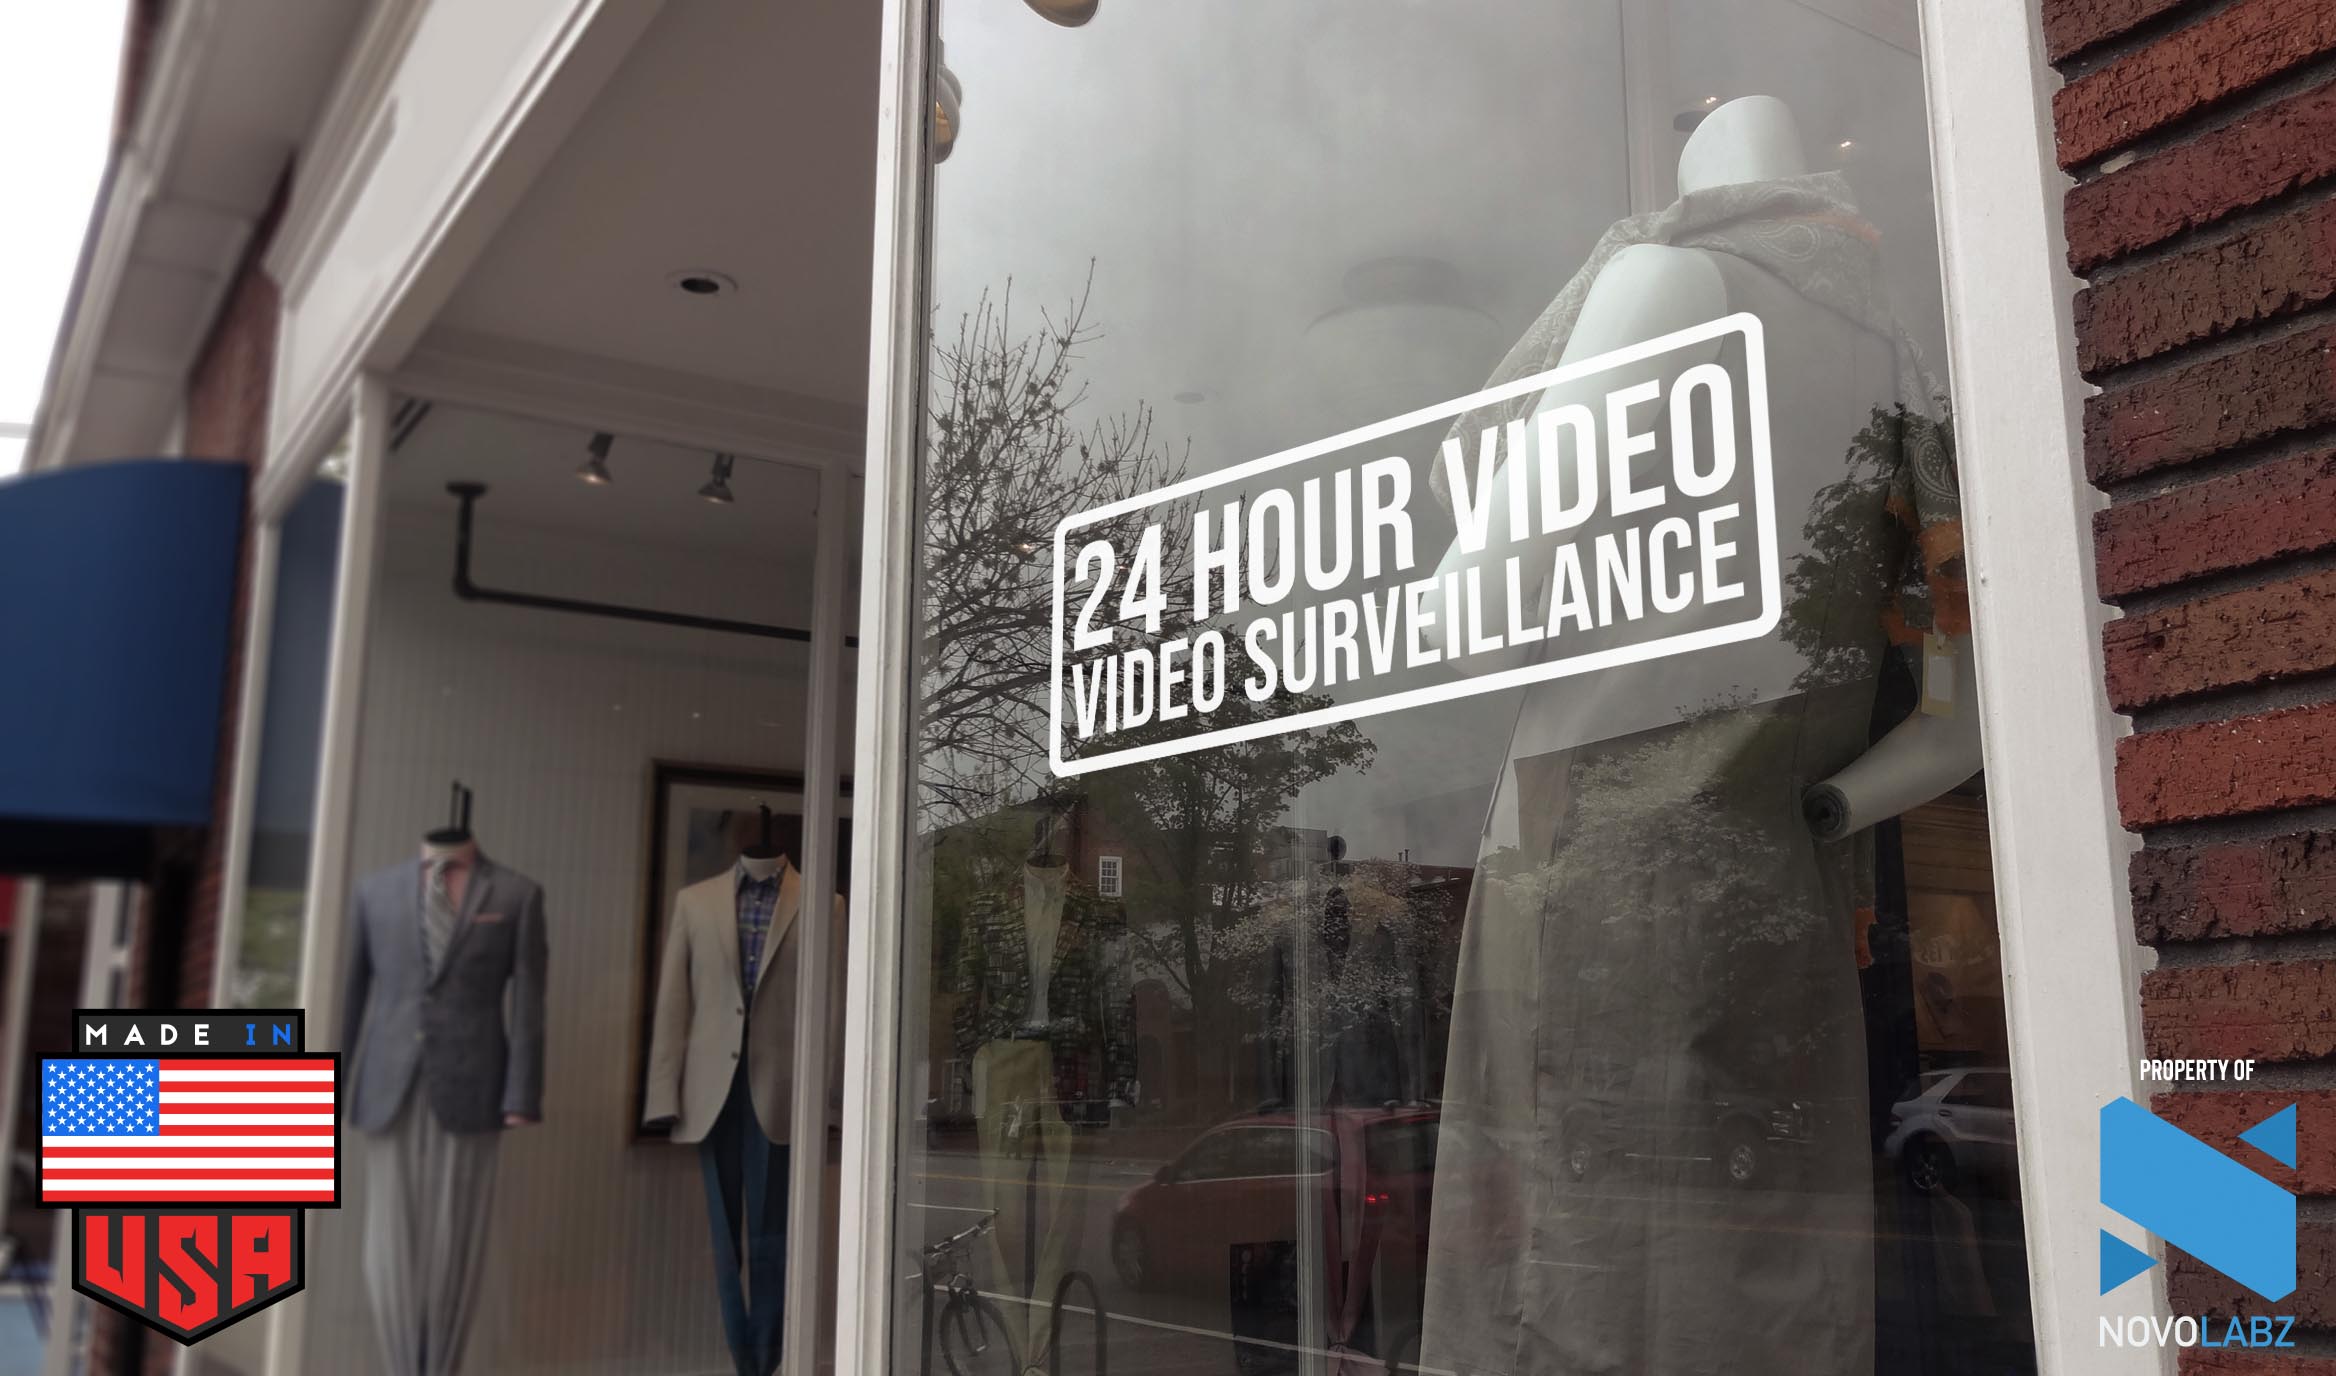 24 Hour Video Surveillance Vinyl Decal